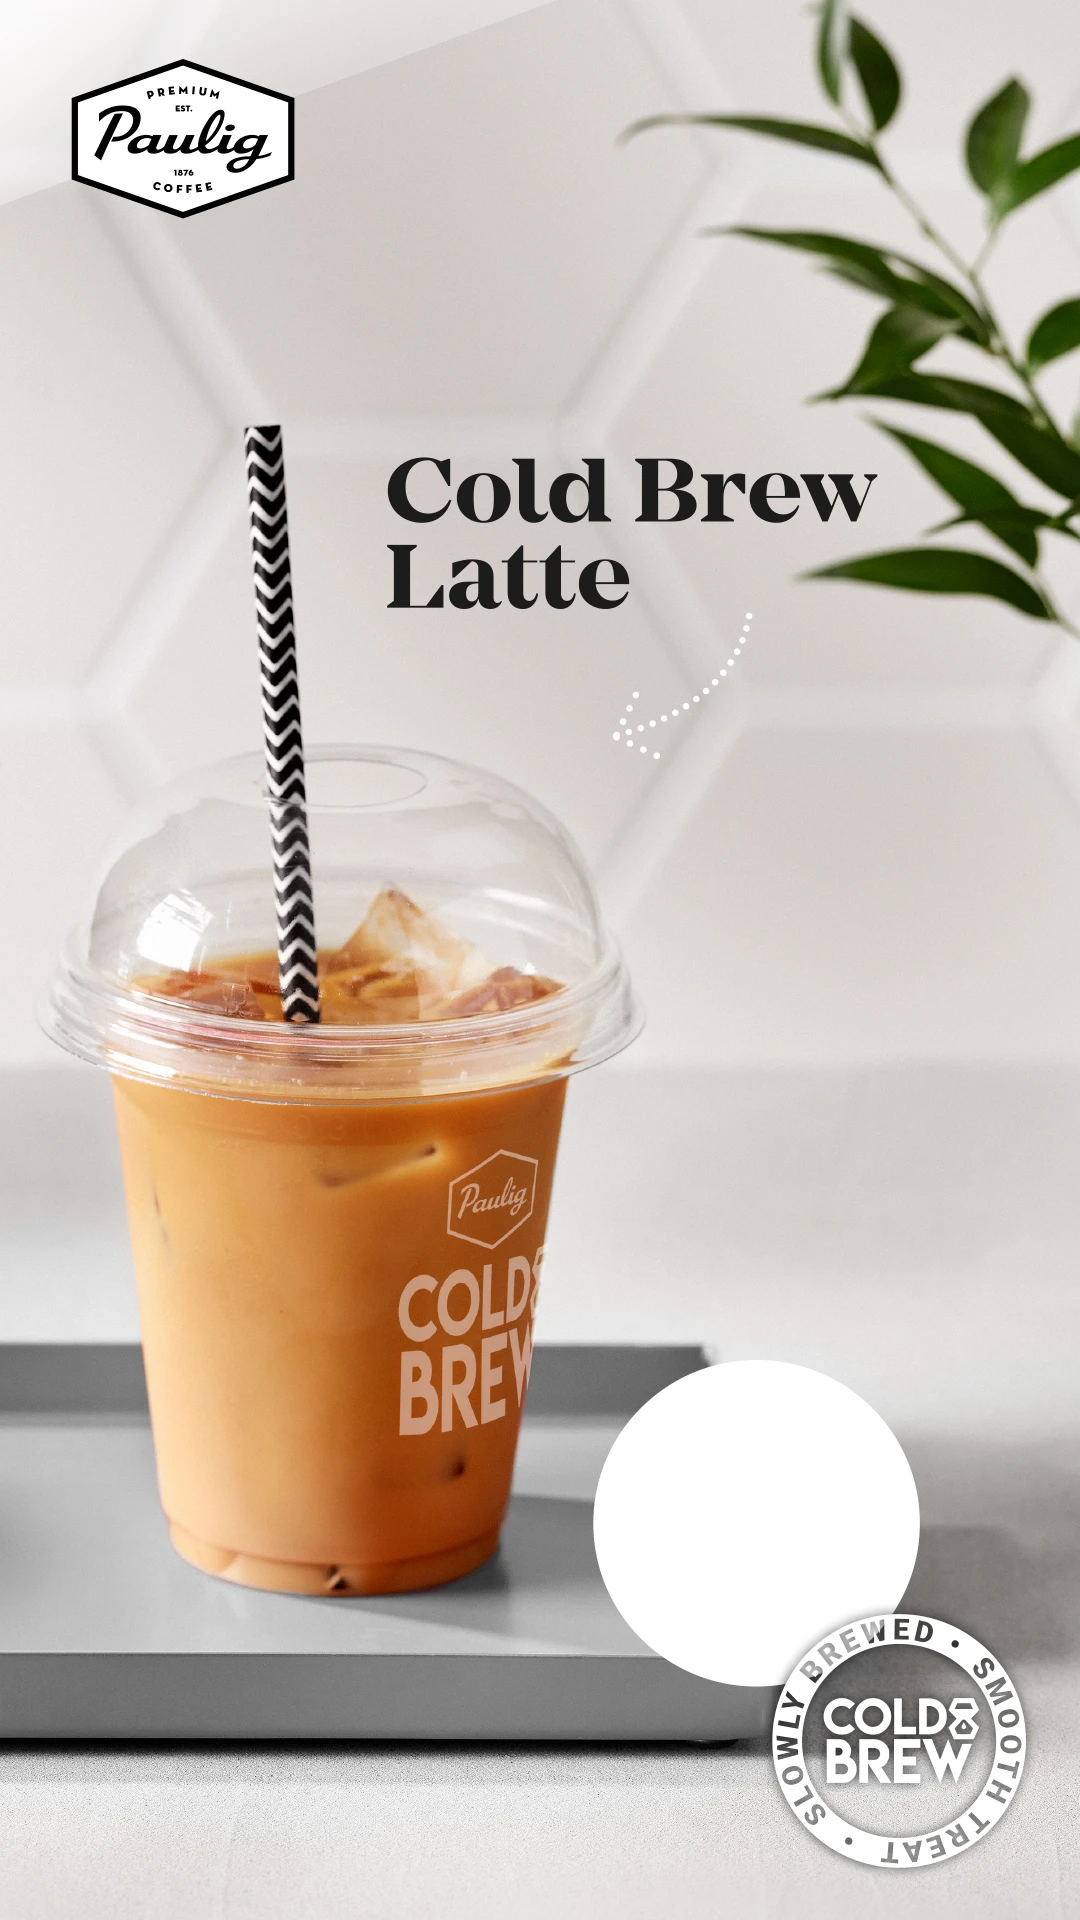 Cold Brew Latte screen vertical